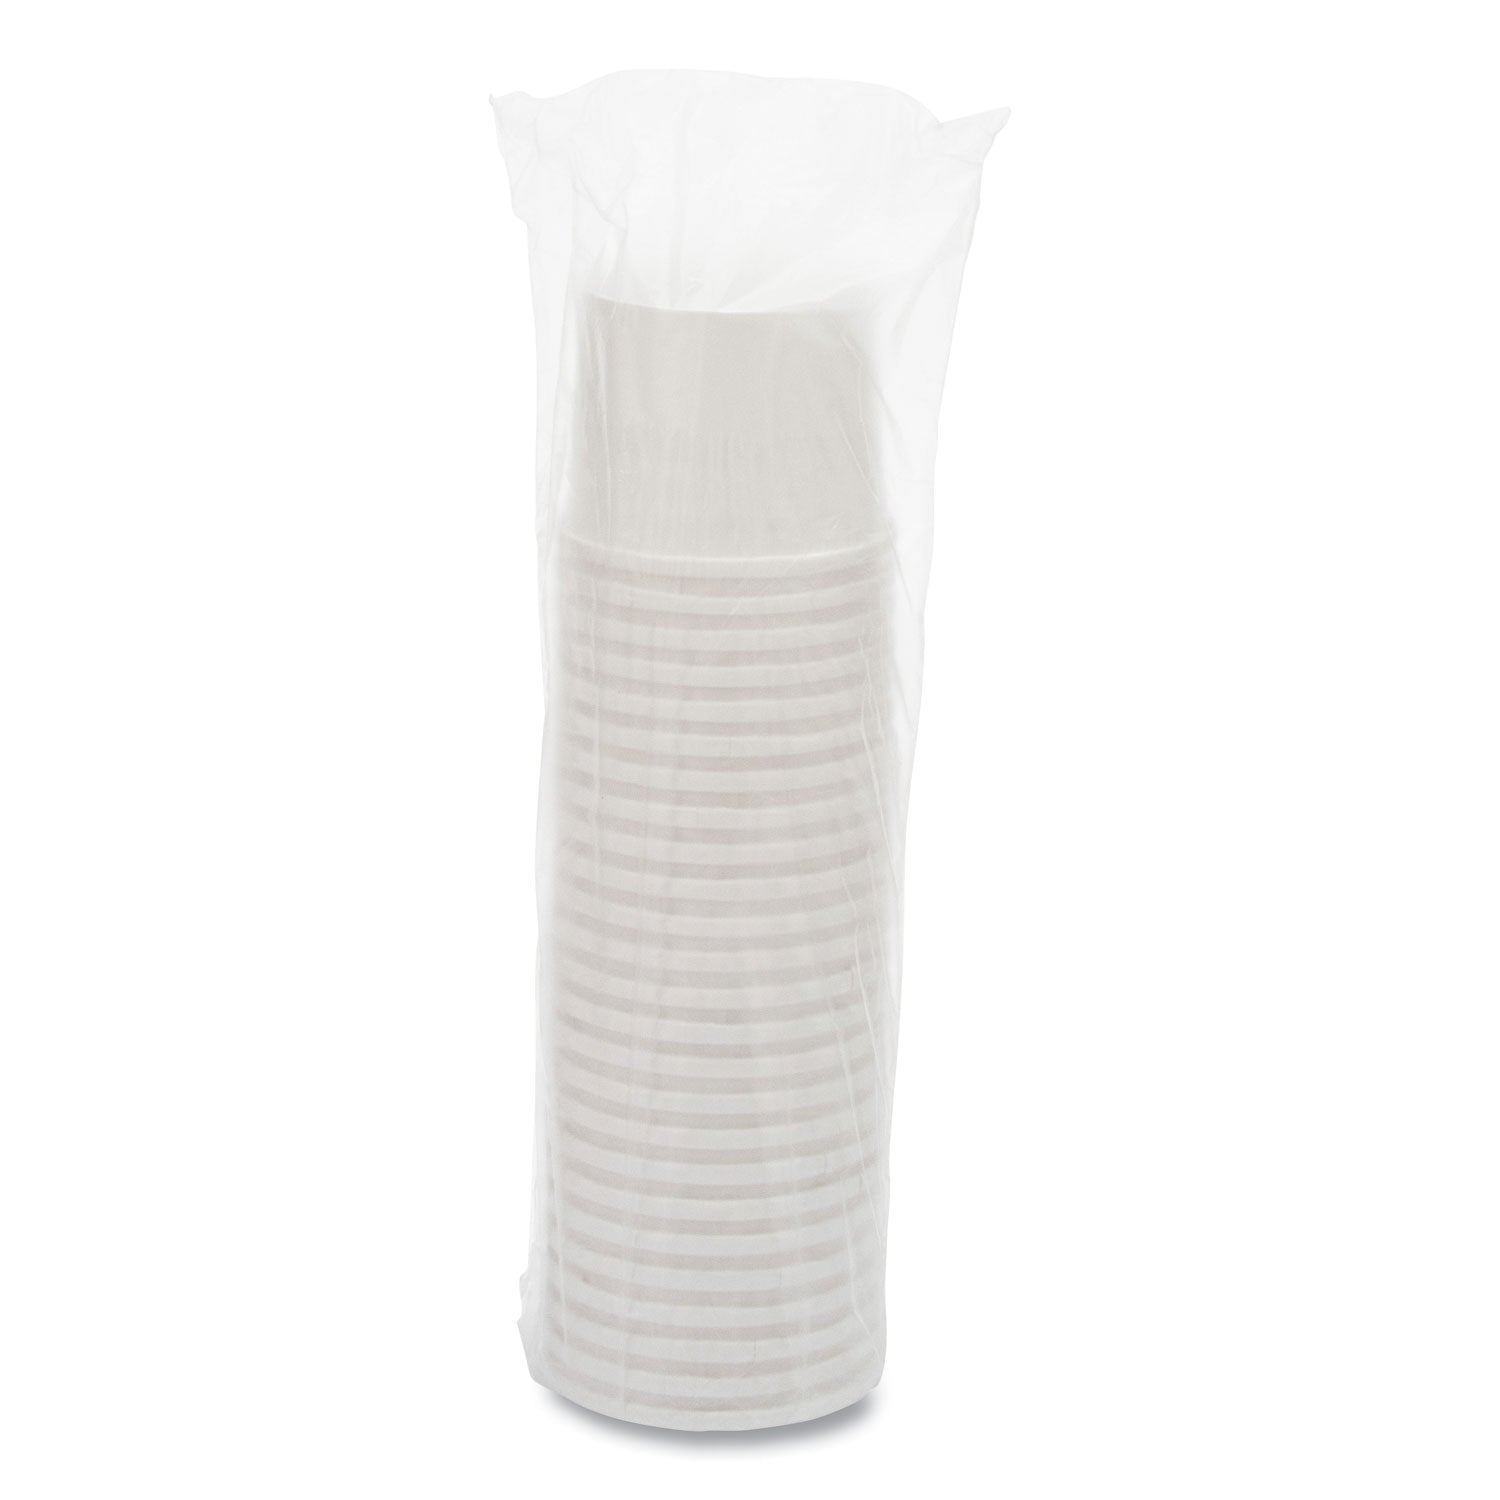 flexstyle-double-poly-paper-containers-12-oz-36-diameter-white-paper-25-bag-20-bags-carton_scchs4125wh - 2